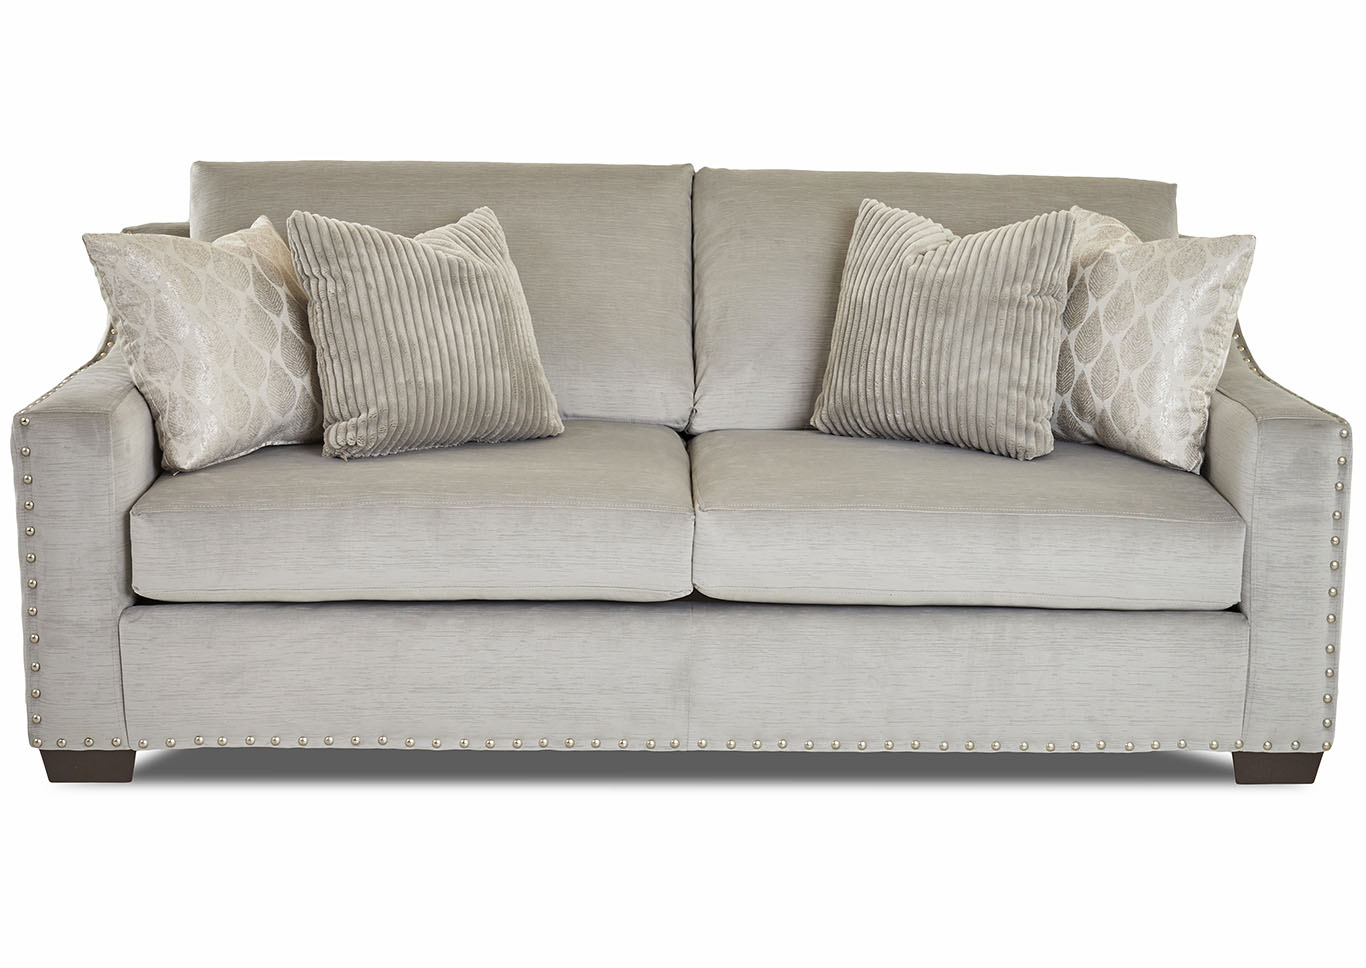 Argos Empire Dove Stationary Fabric Sofa,Klaussner Home Furnishings